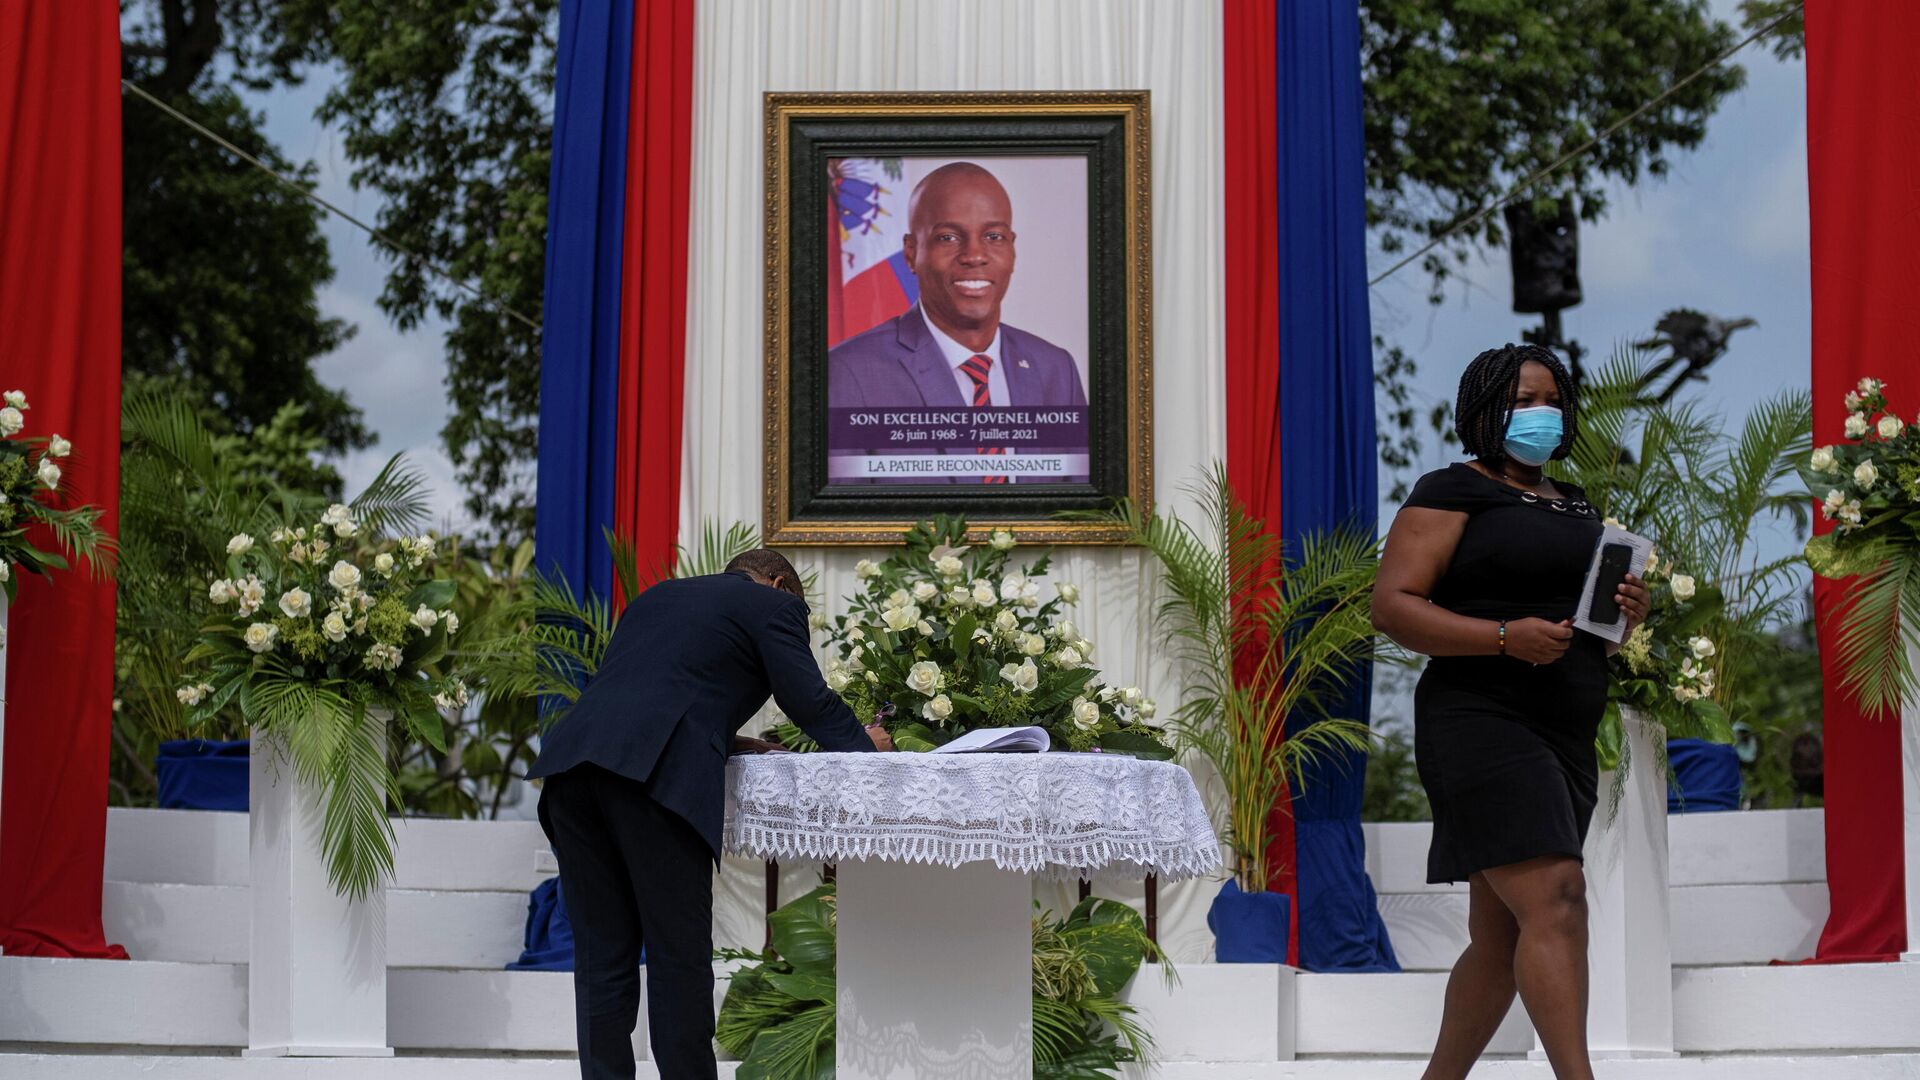 Ceremonioa en honor al expresidente de Haití, Jovenel Moise - Sputnik Mundo, 1920, 10.08.2021